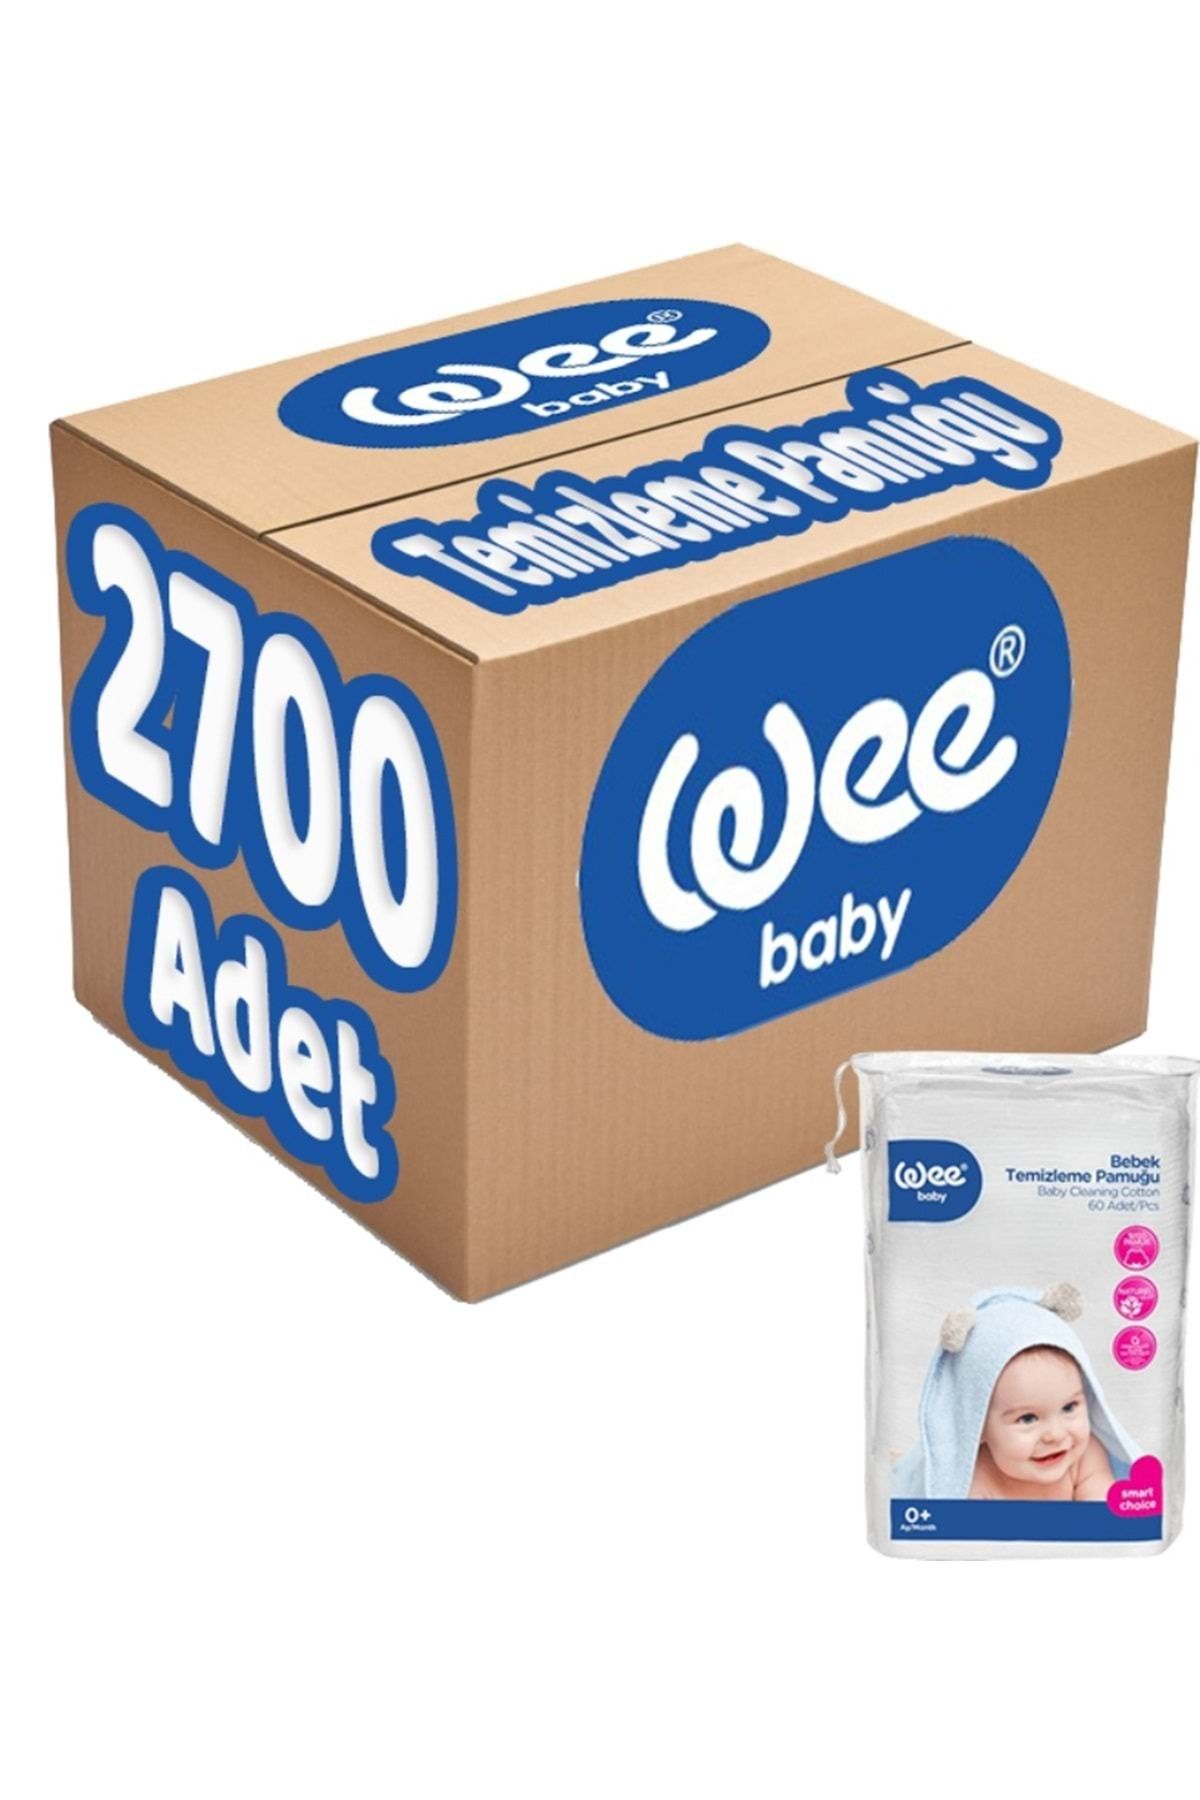 Wee Baby Bebek Temizleme Pamuğu 2700 Adet (45pk*60)